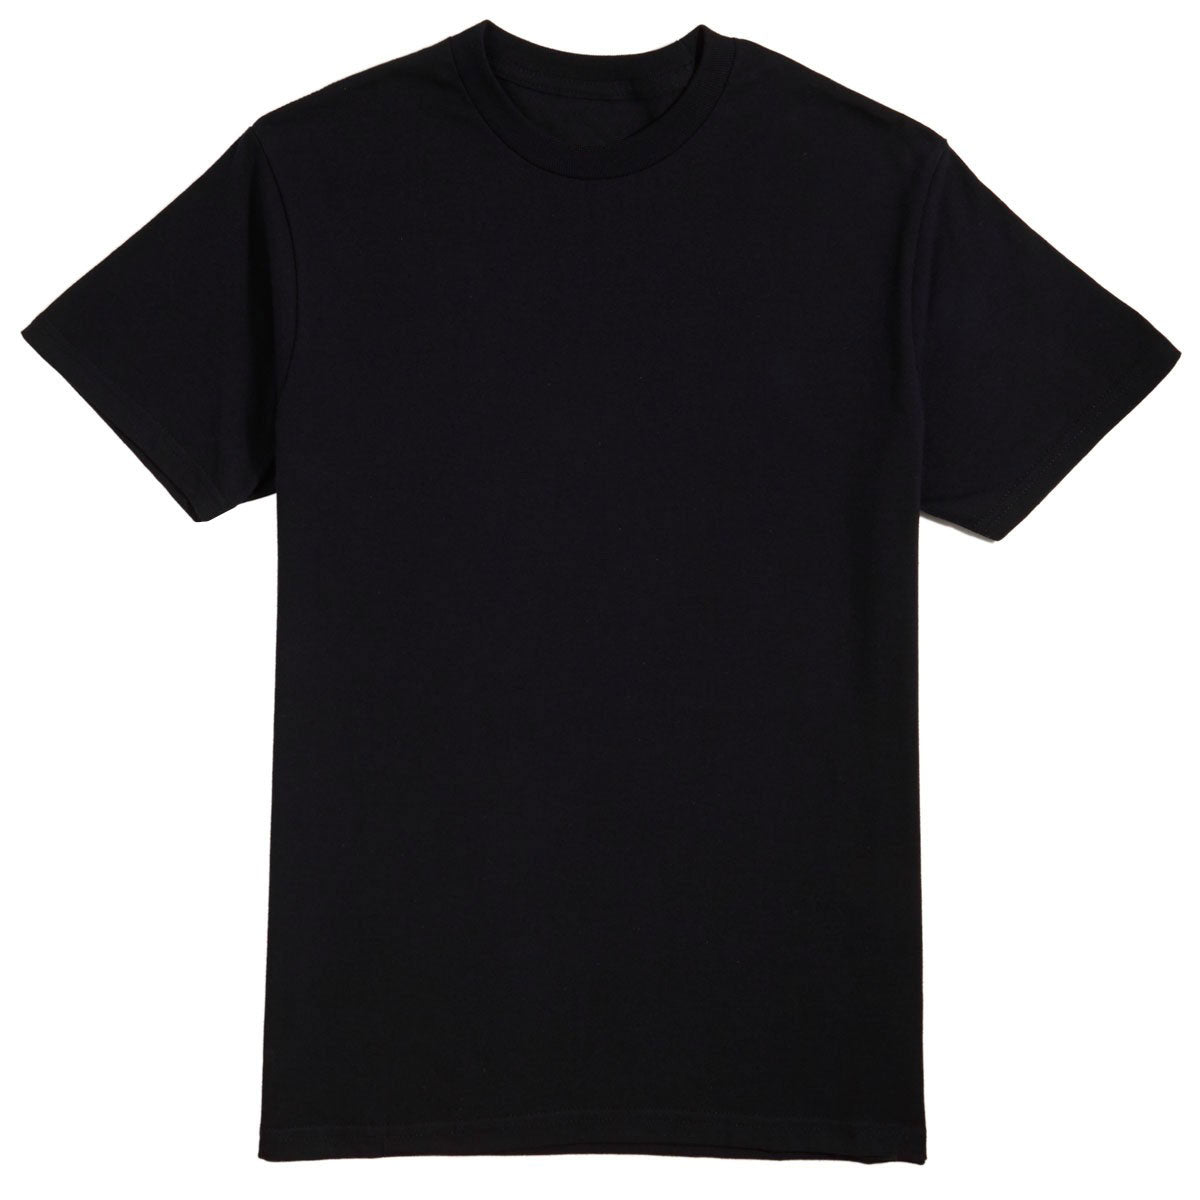 Yusuke Hanai Flash Sheet Customs X T-Shirt - Black - XL image 1